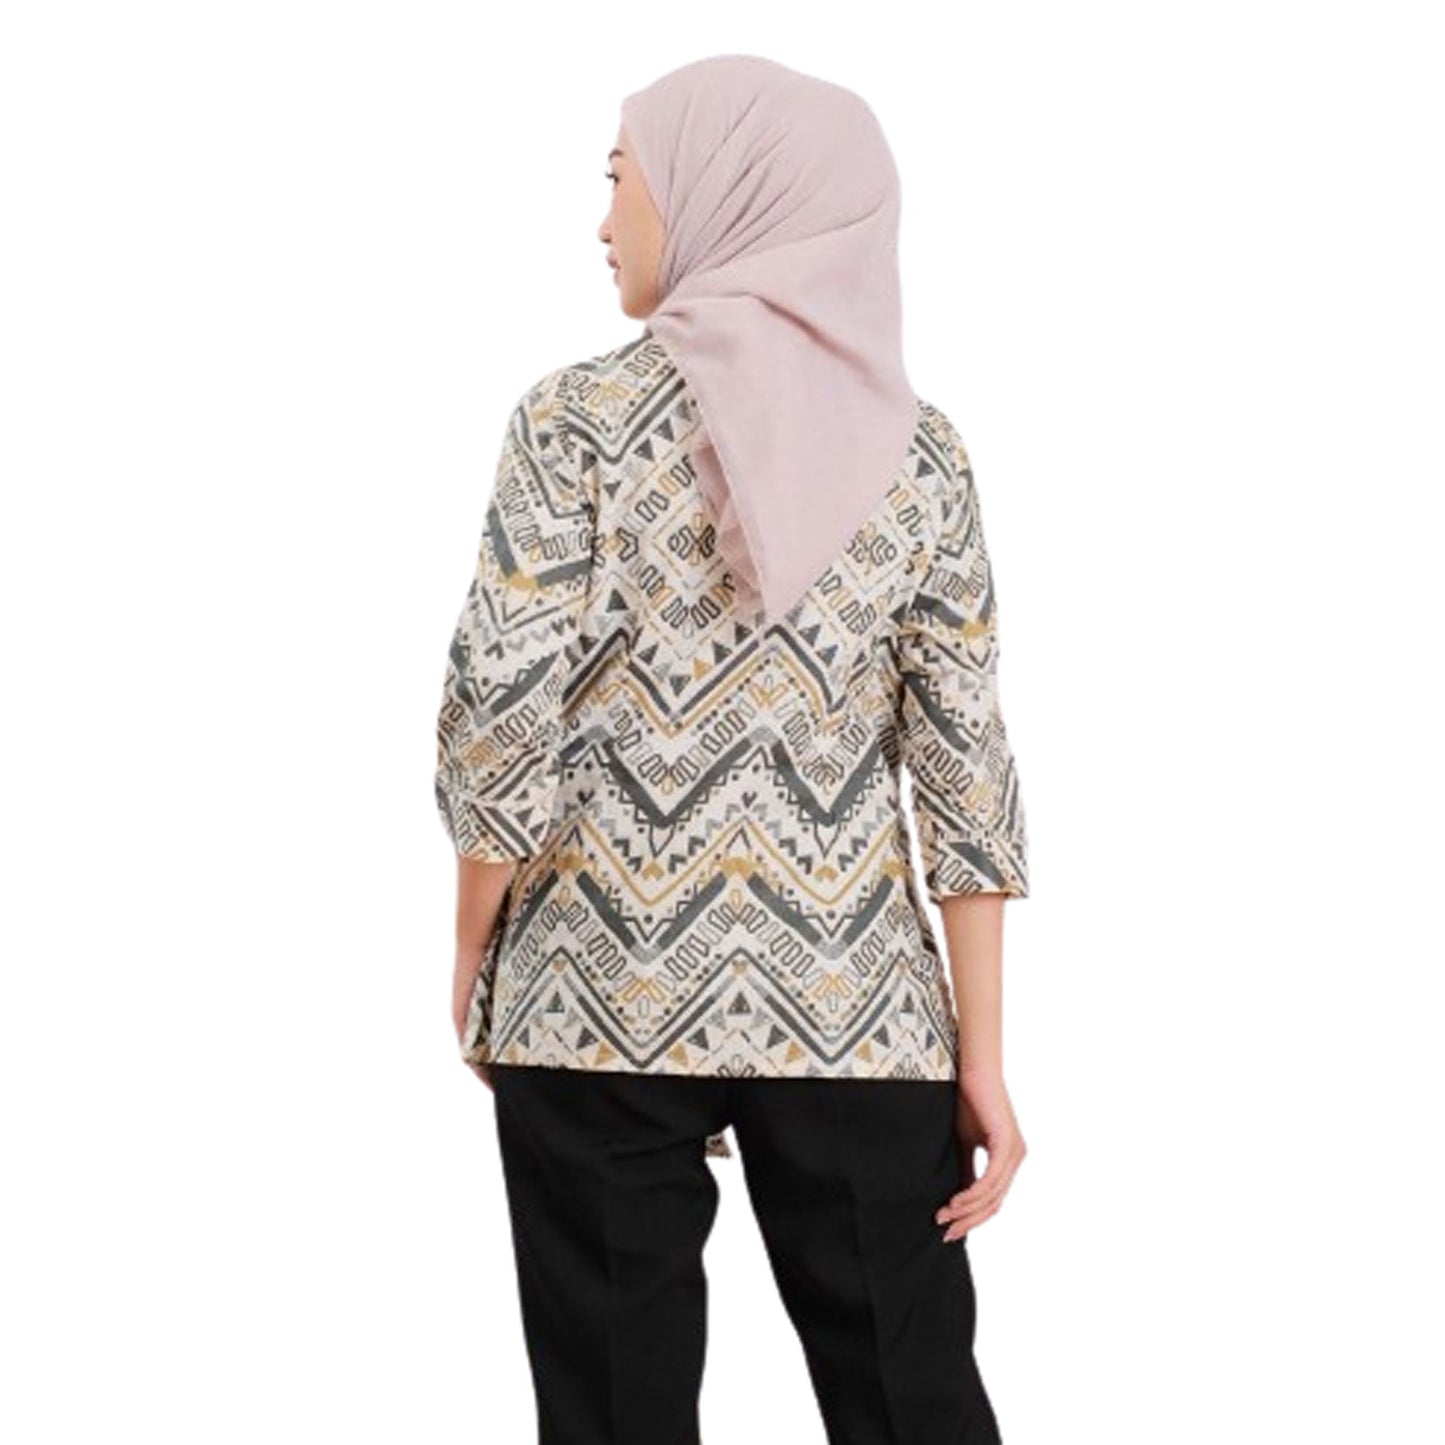 Elegant and Modern: Women's Pyramid Batik Blouse for Stunning Work Appearances, Batik Women, Women Blouse, Batik Blouse, Blouse For Women